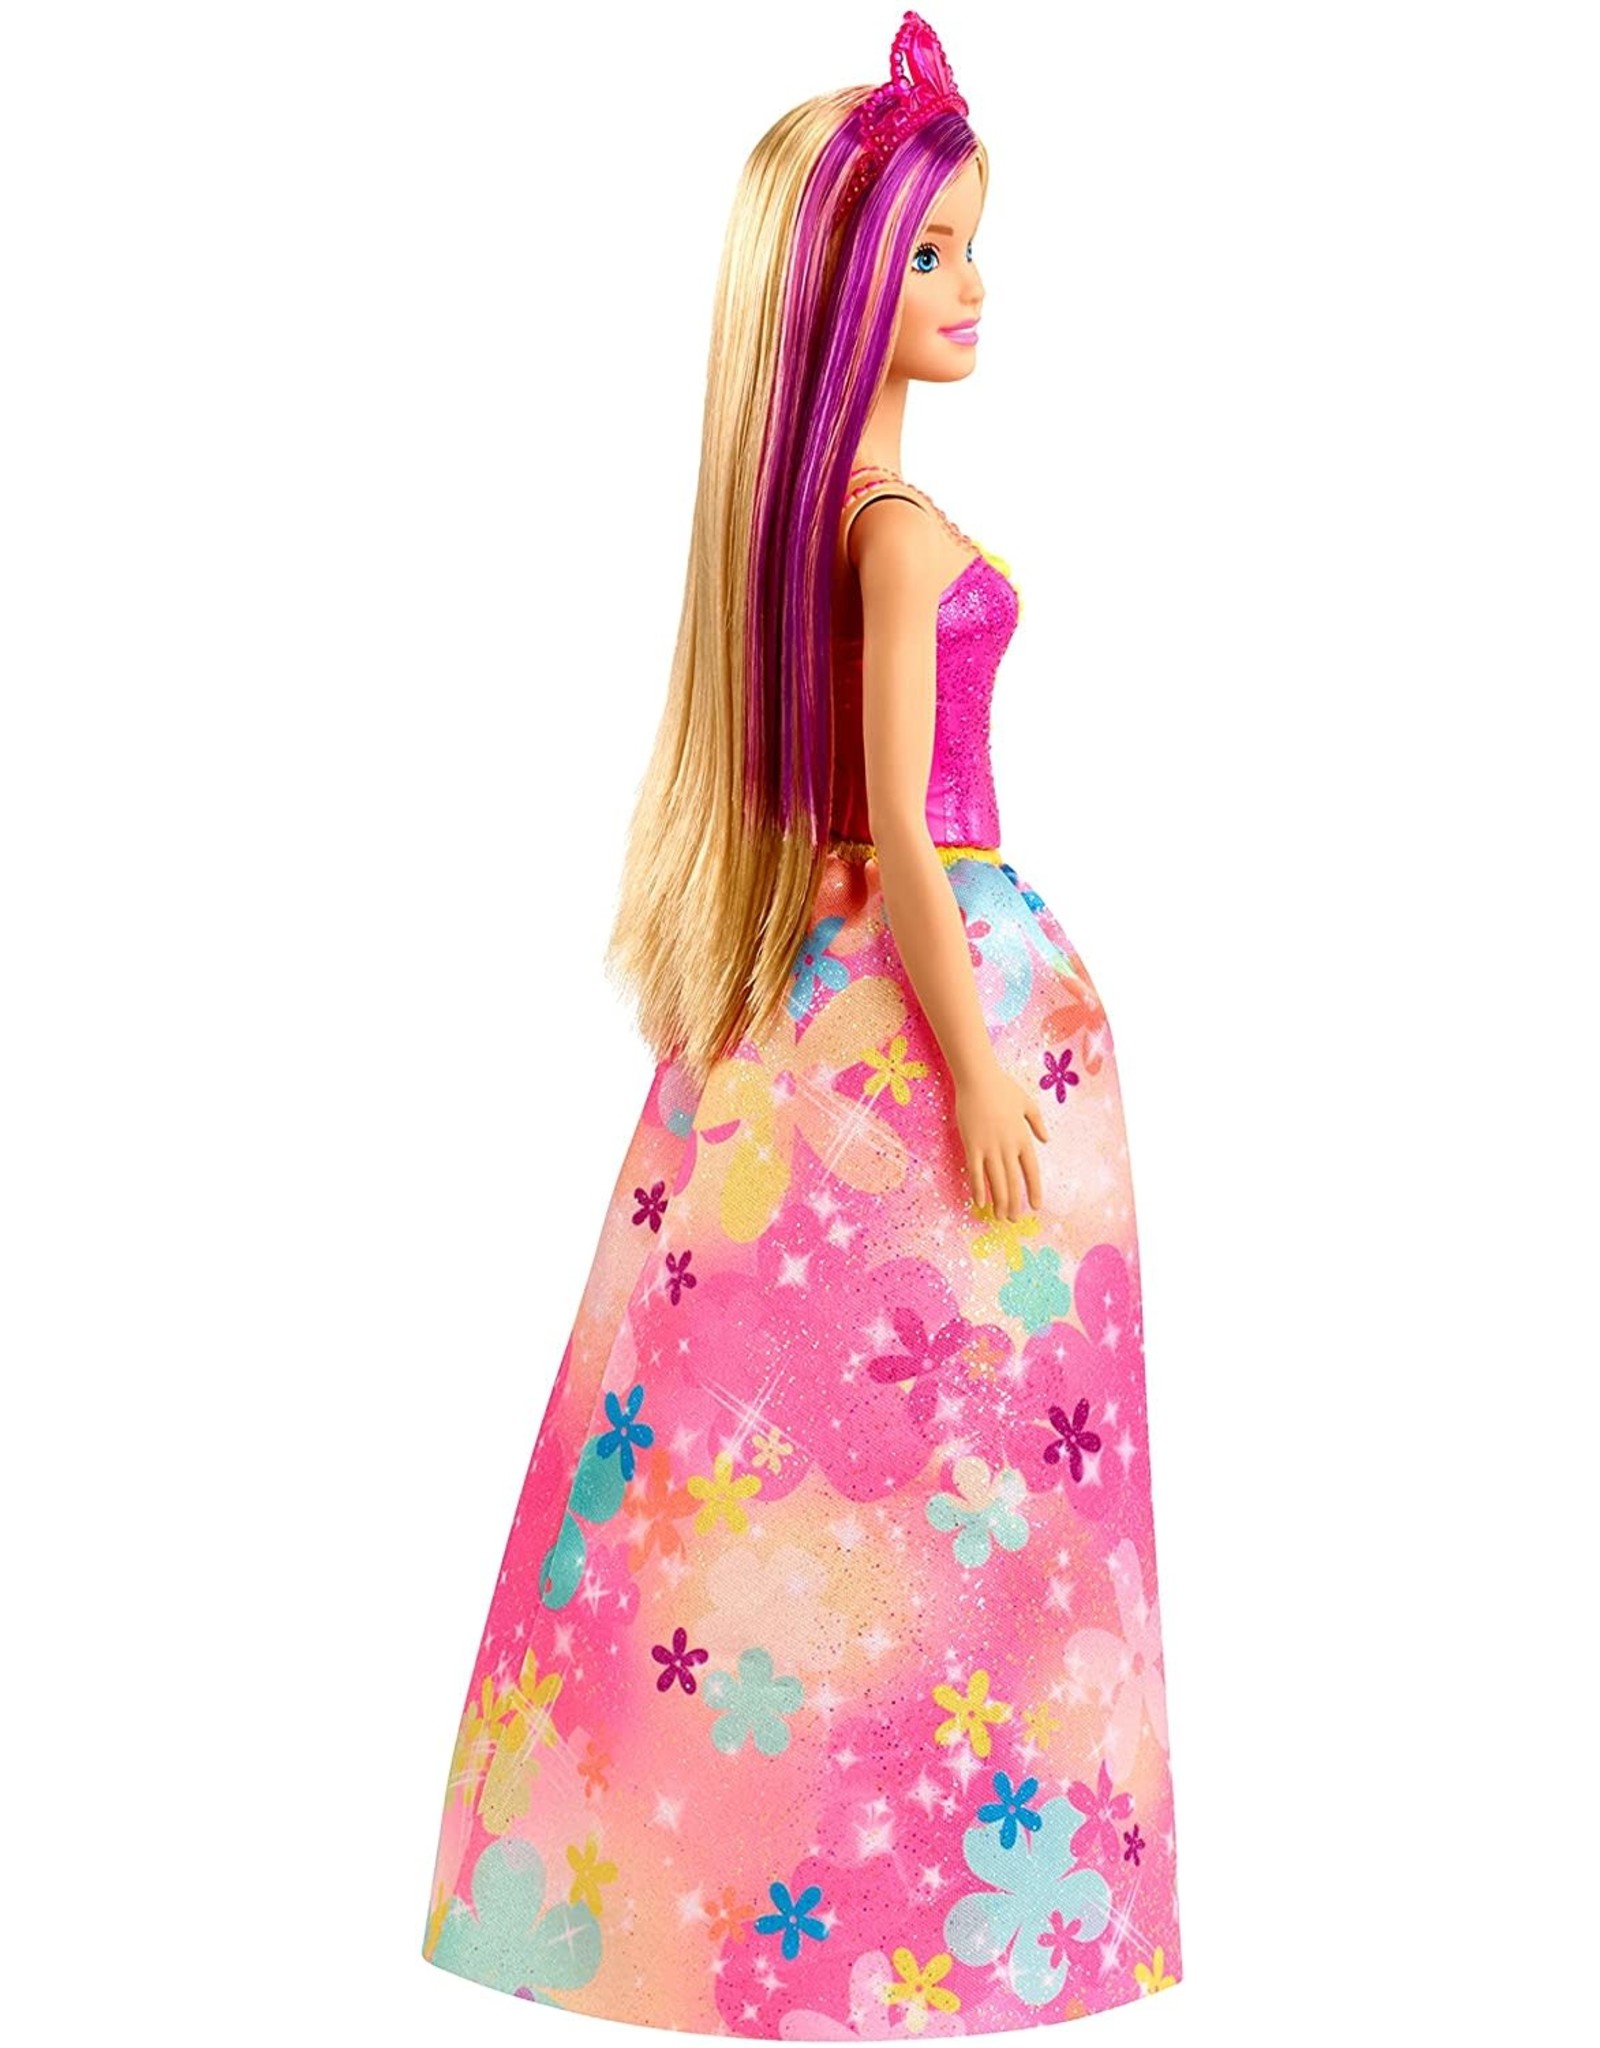 Mattel Barbie Dreamtopia Princess Blonde